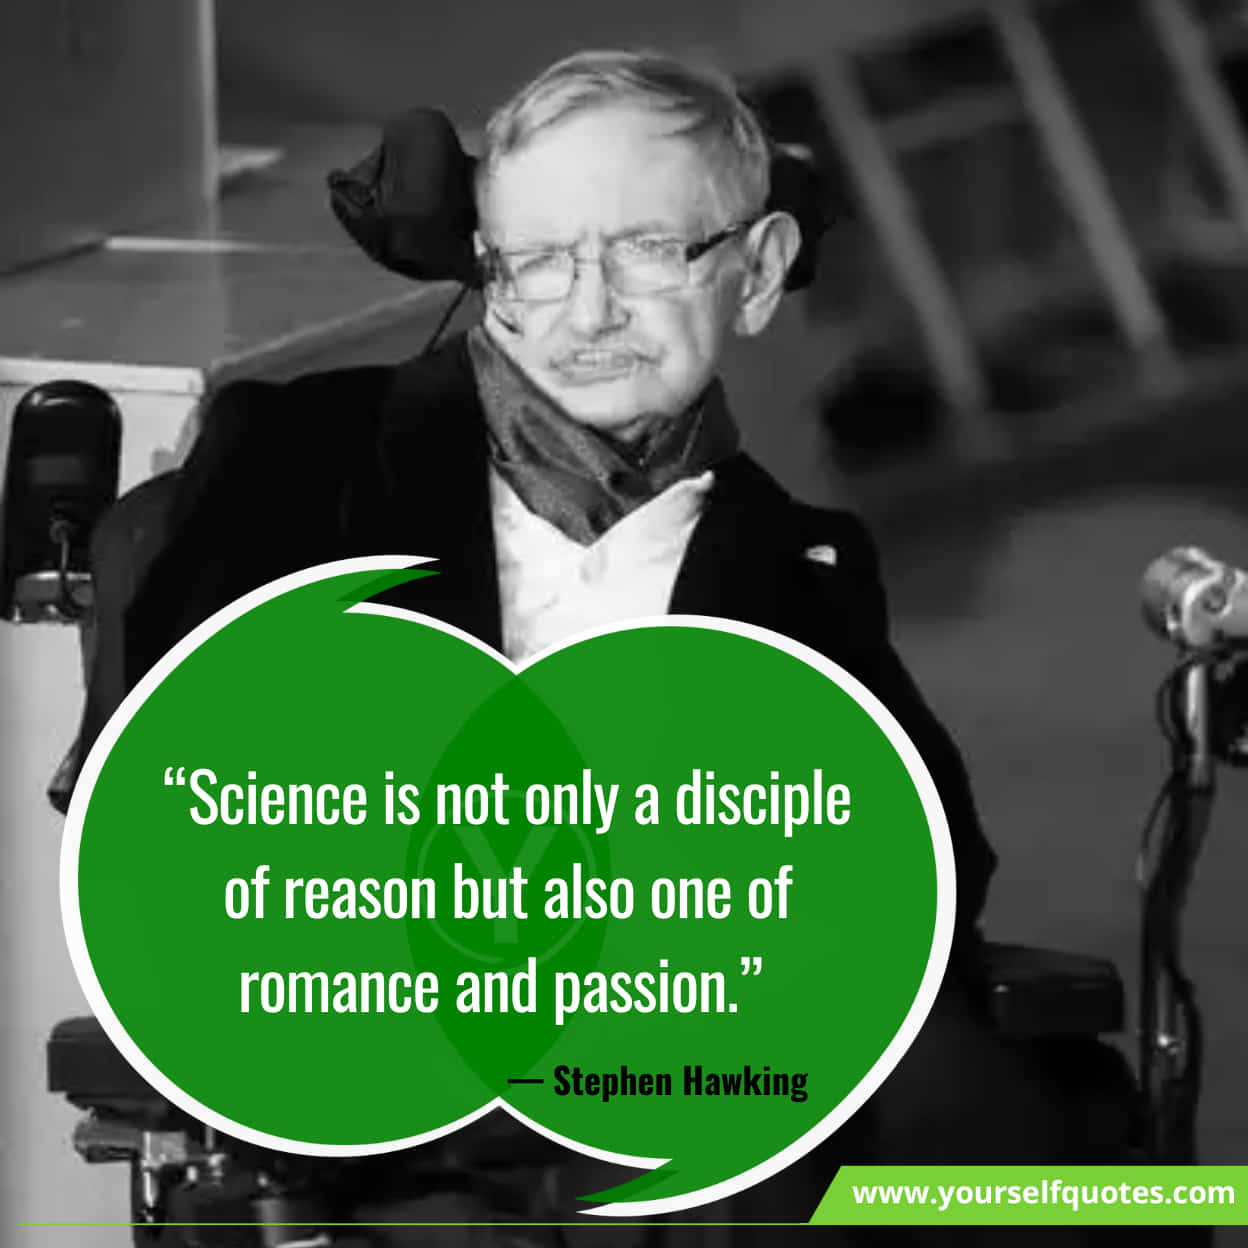 Inspiring Stephen Hawking's Motivational Quotes